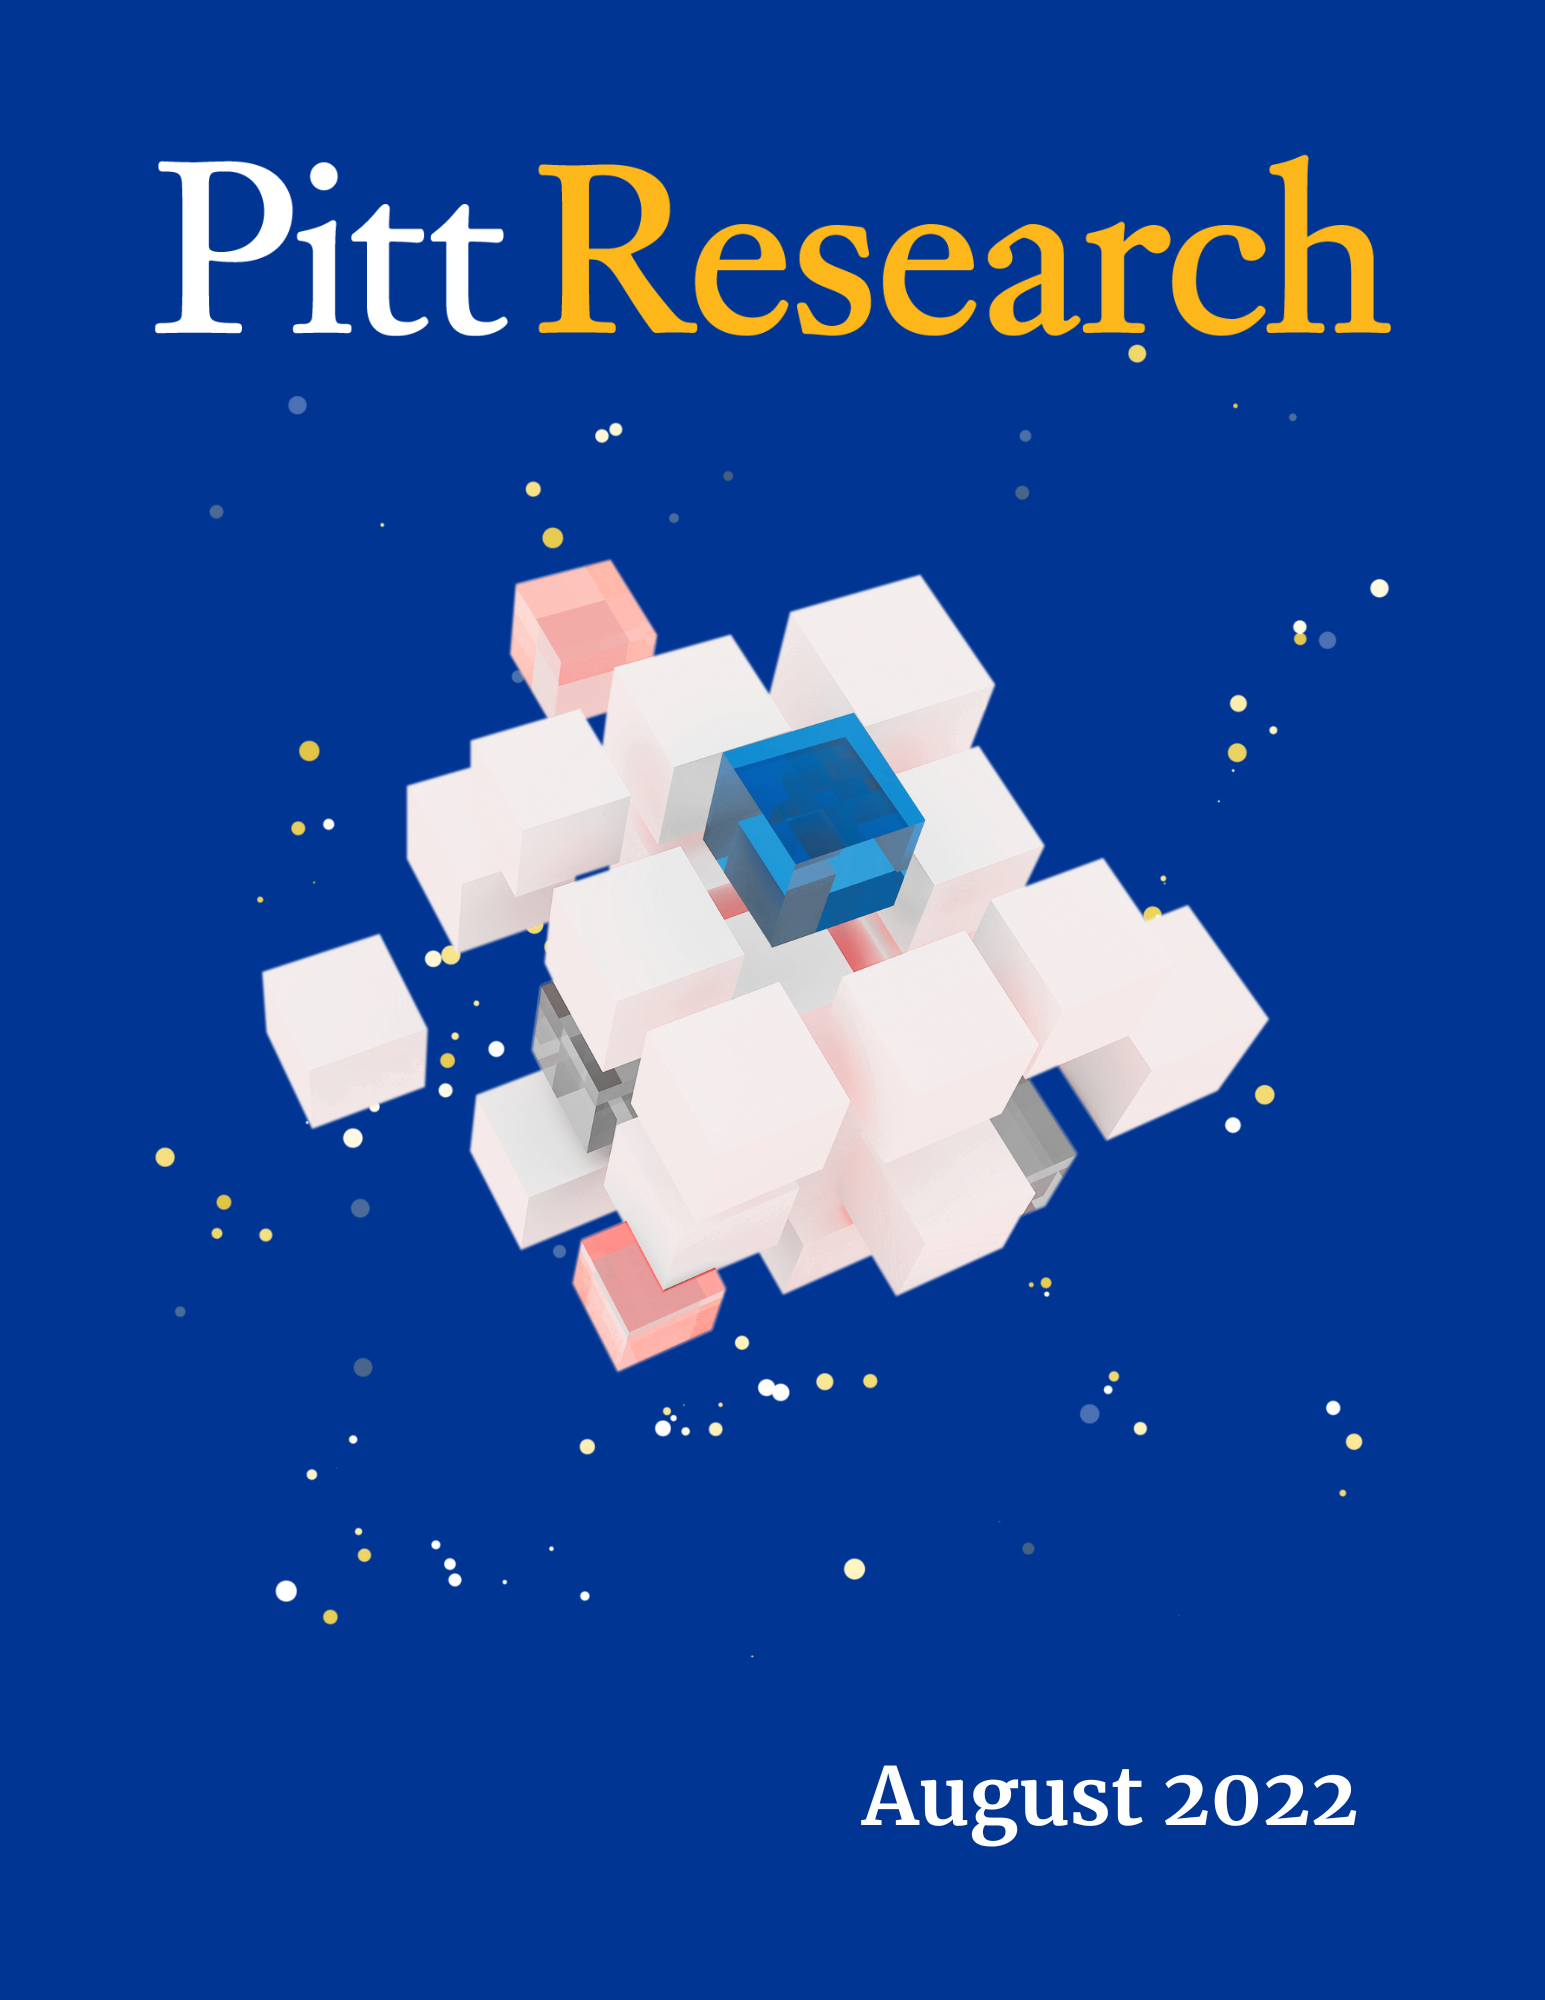 Pitt Research Newsletter for August 2022